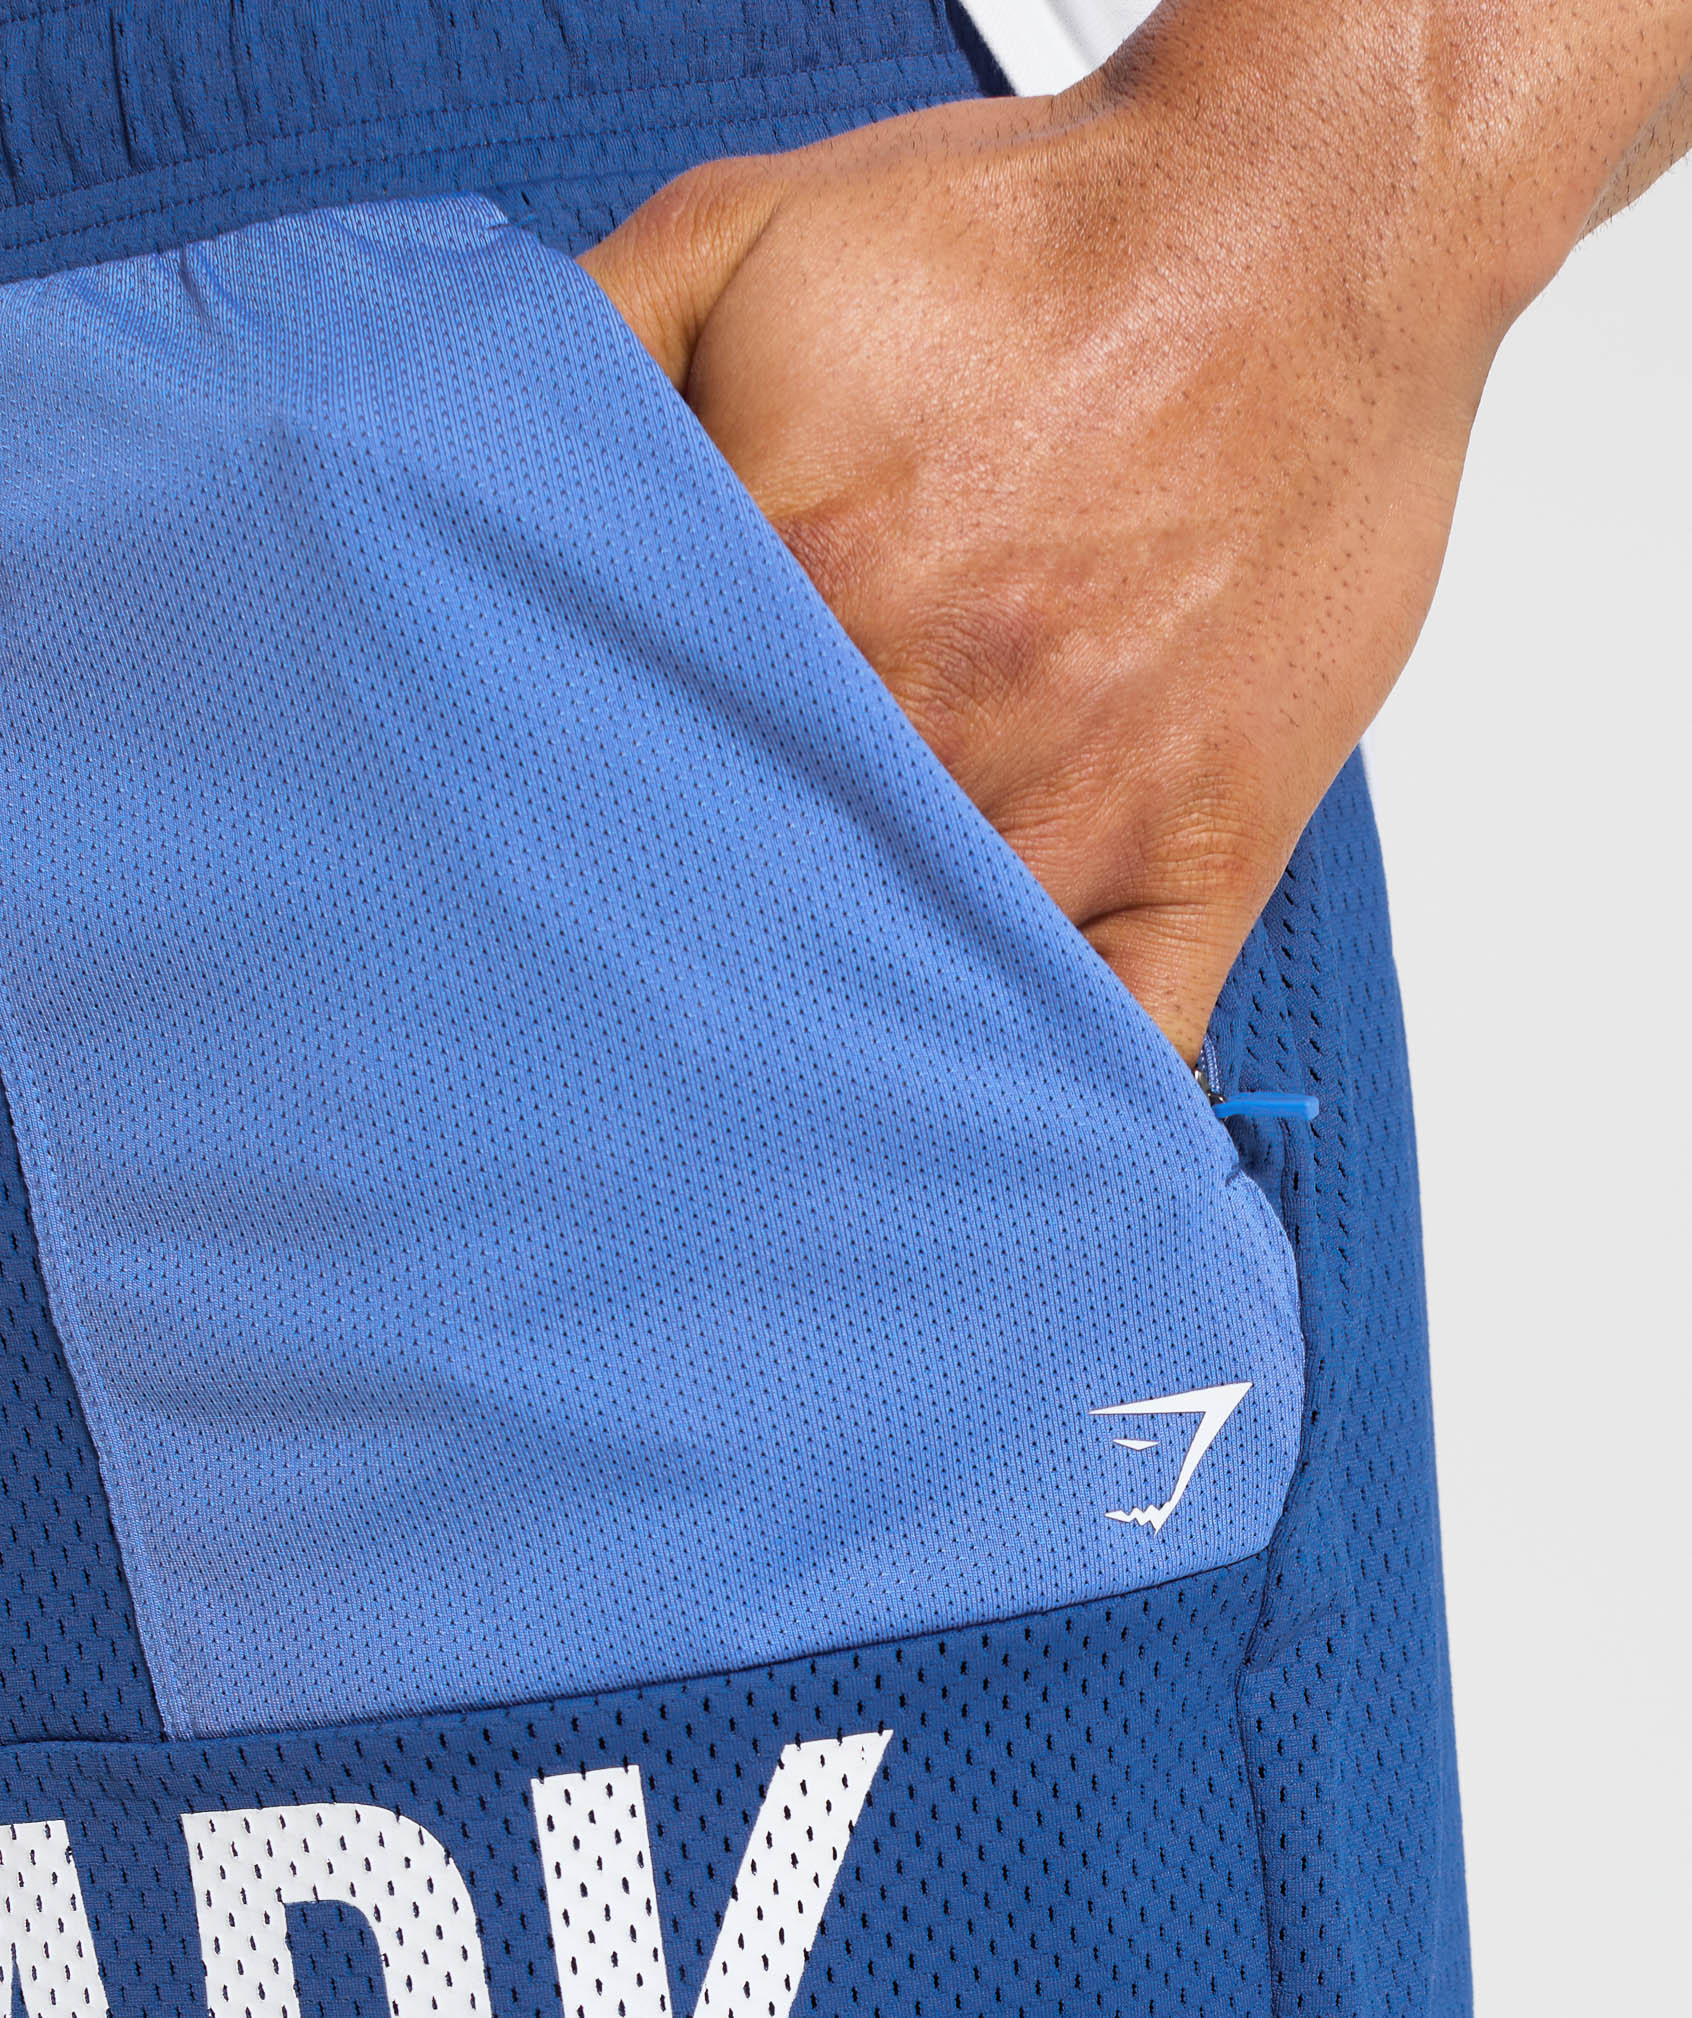 Brandmark Mesh 5" Shorts in Wave Blue/Iris Blue - view 8